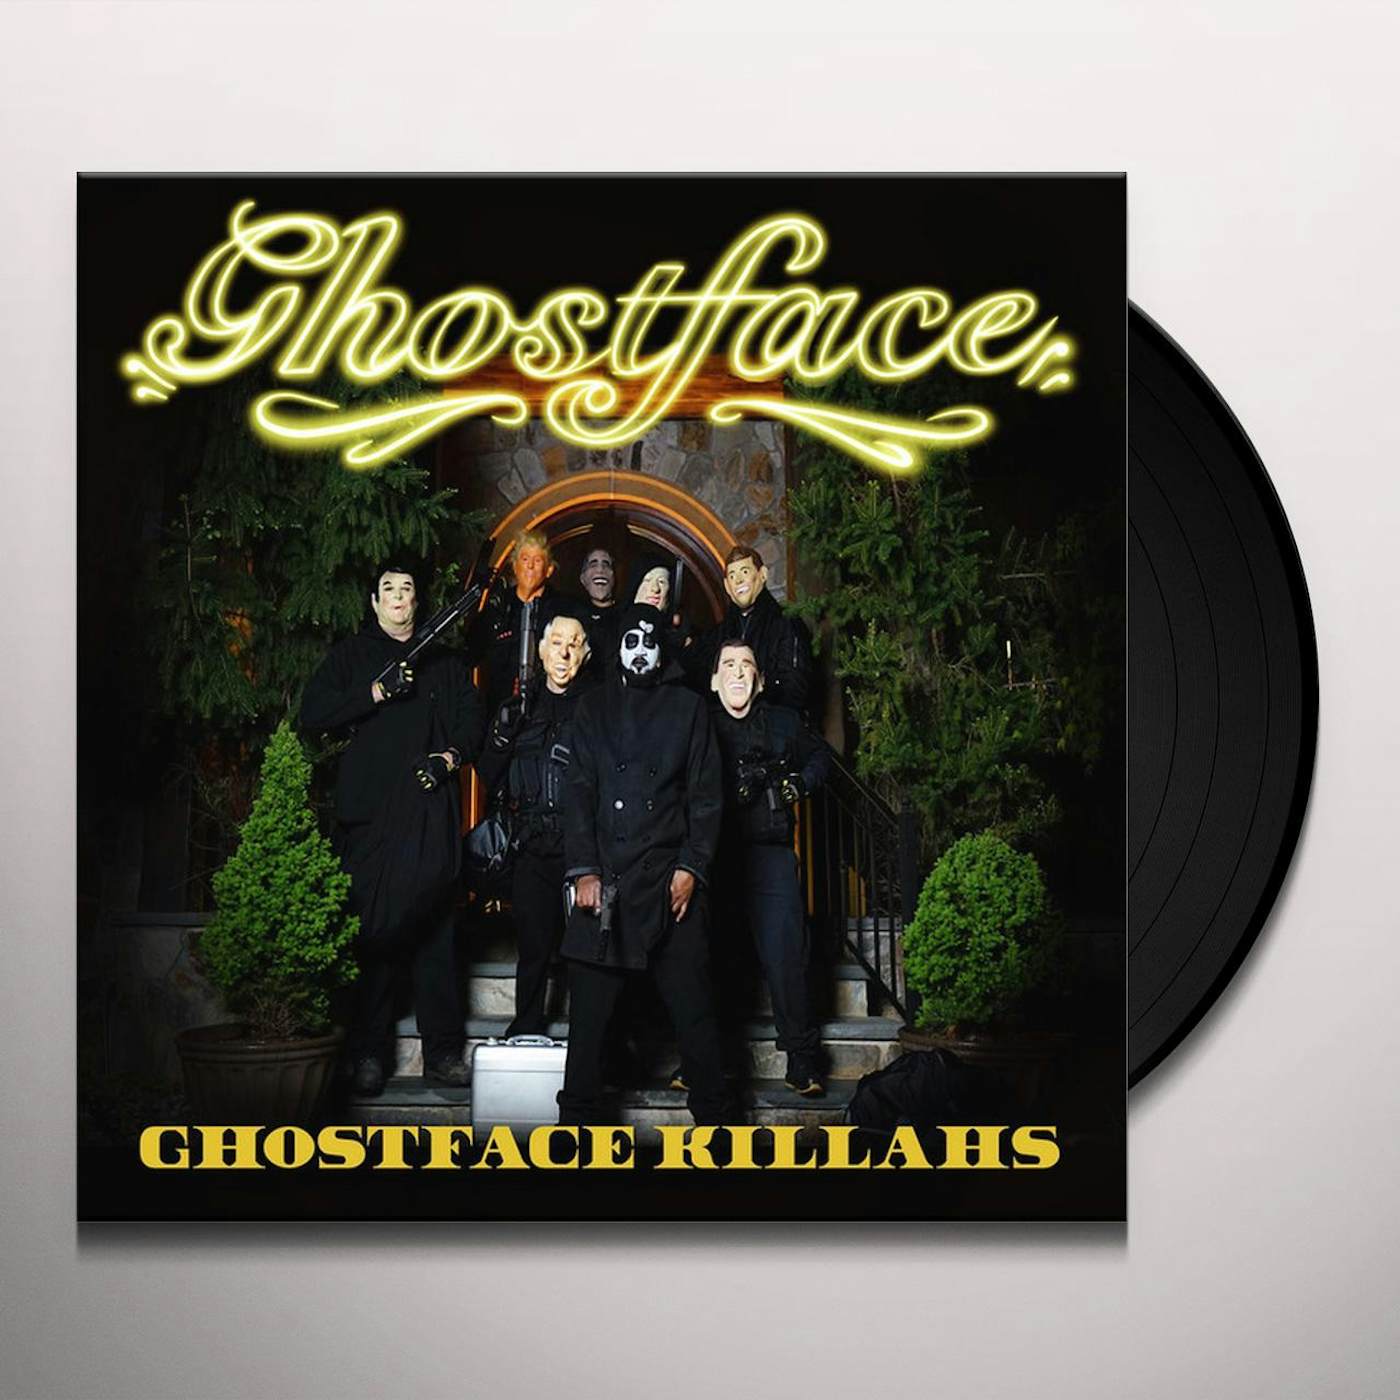 Ghostface Killahs Vinyl Record